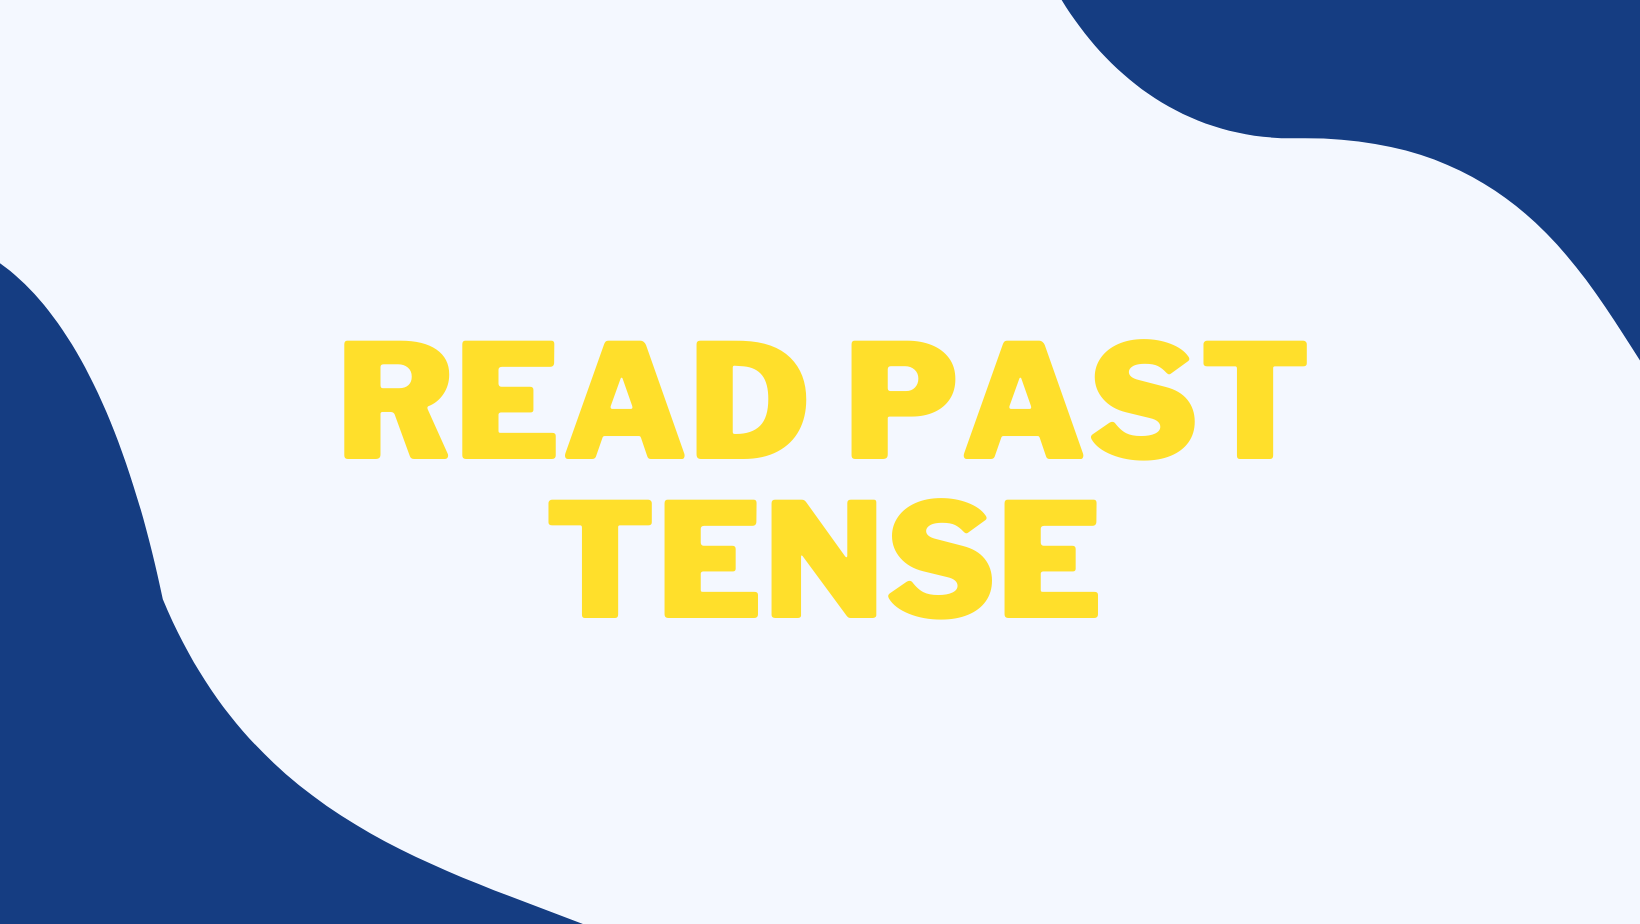 Read past tense